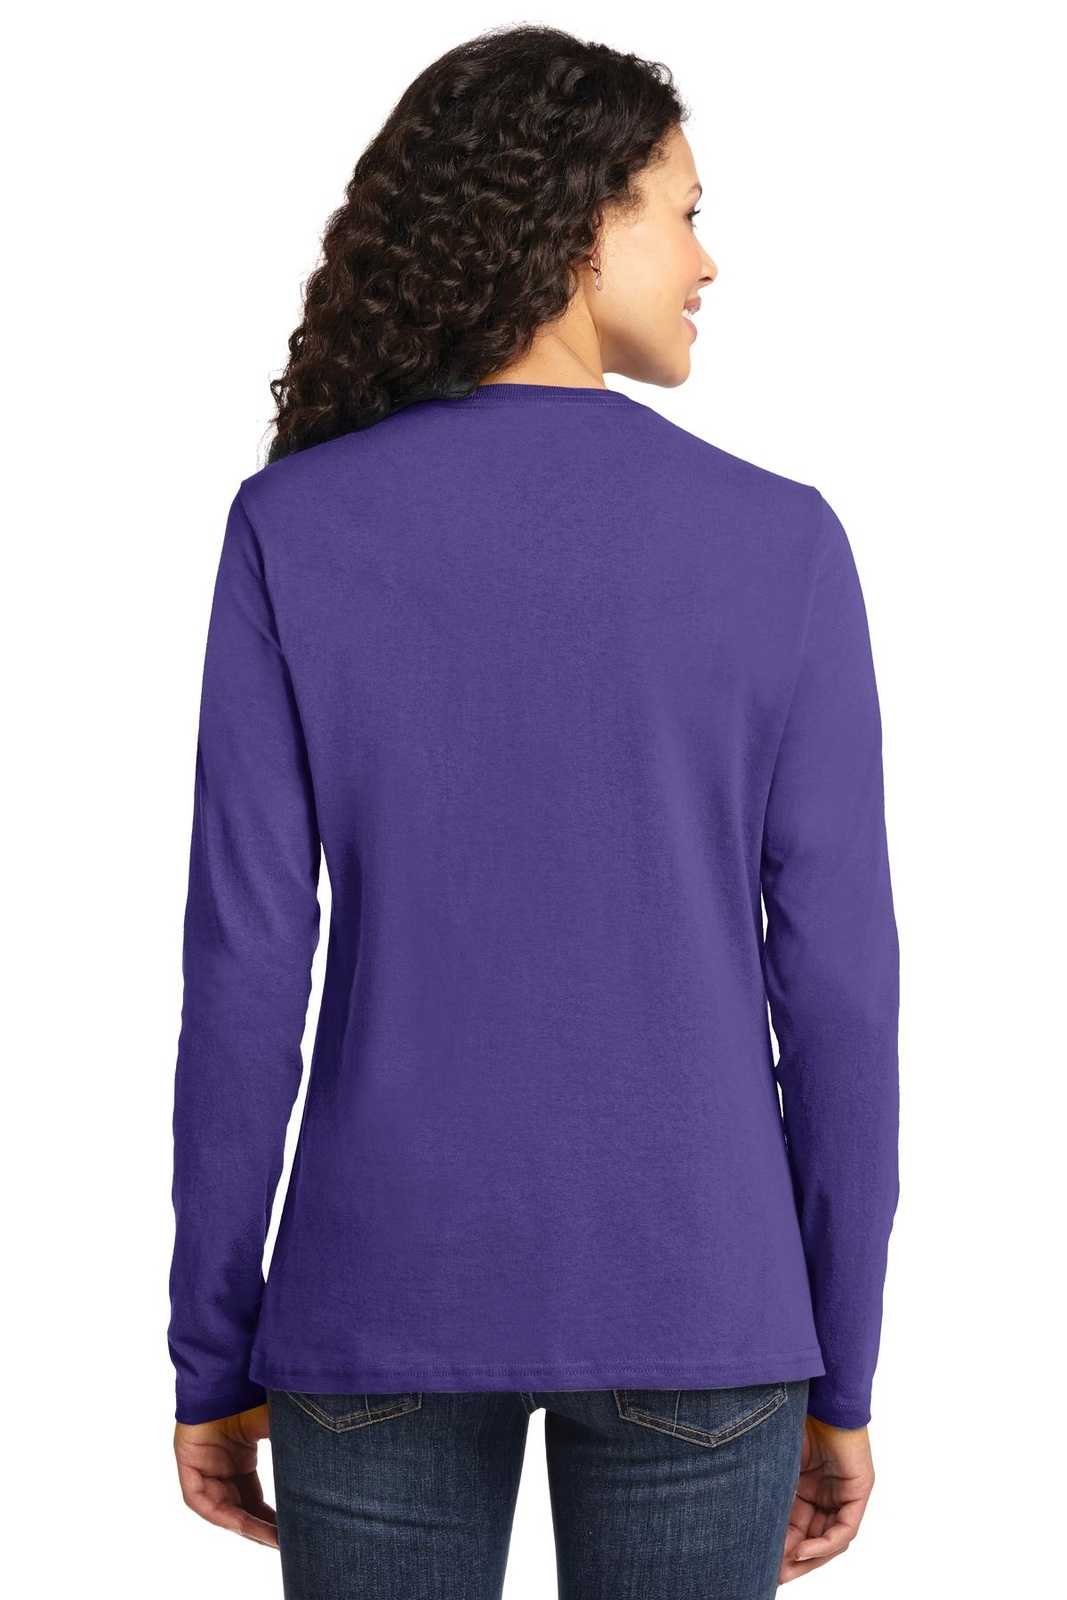 Port & Company LPC54LS Ladies Long Sleeve Core Cotton Tee - Purple - HIT a Double - 1